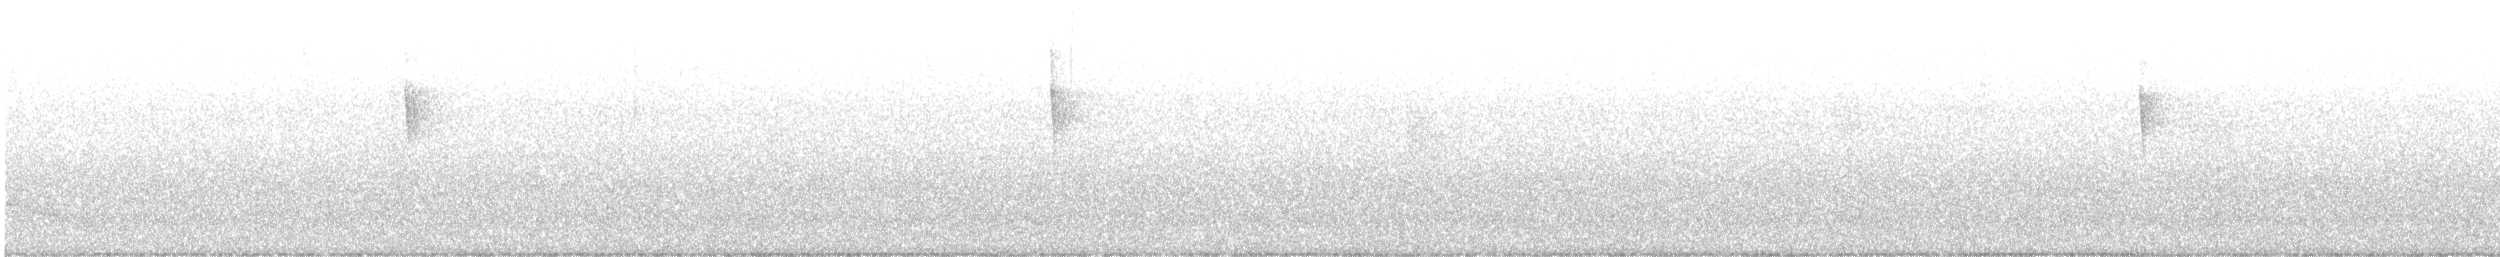 Paruline vermivore - ML620037986